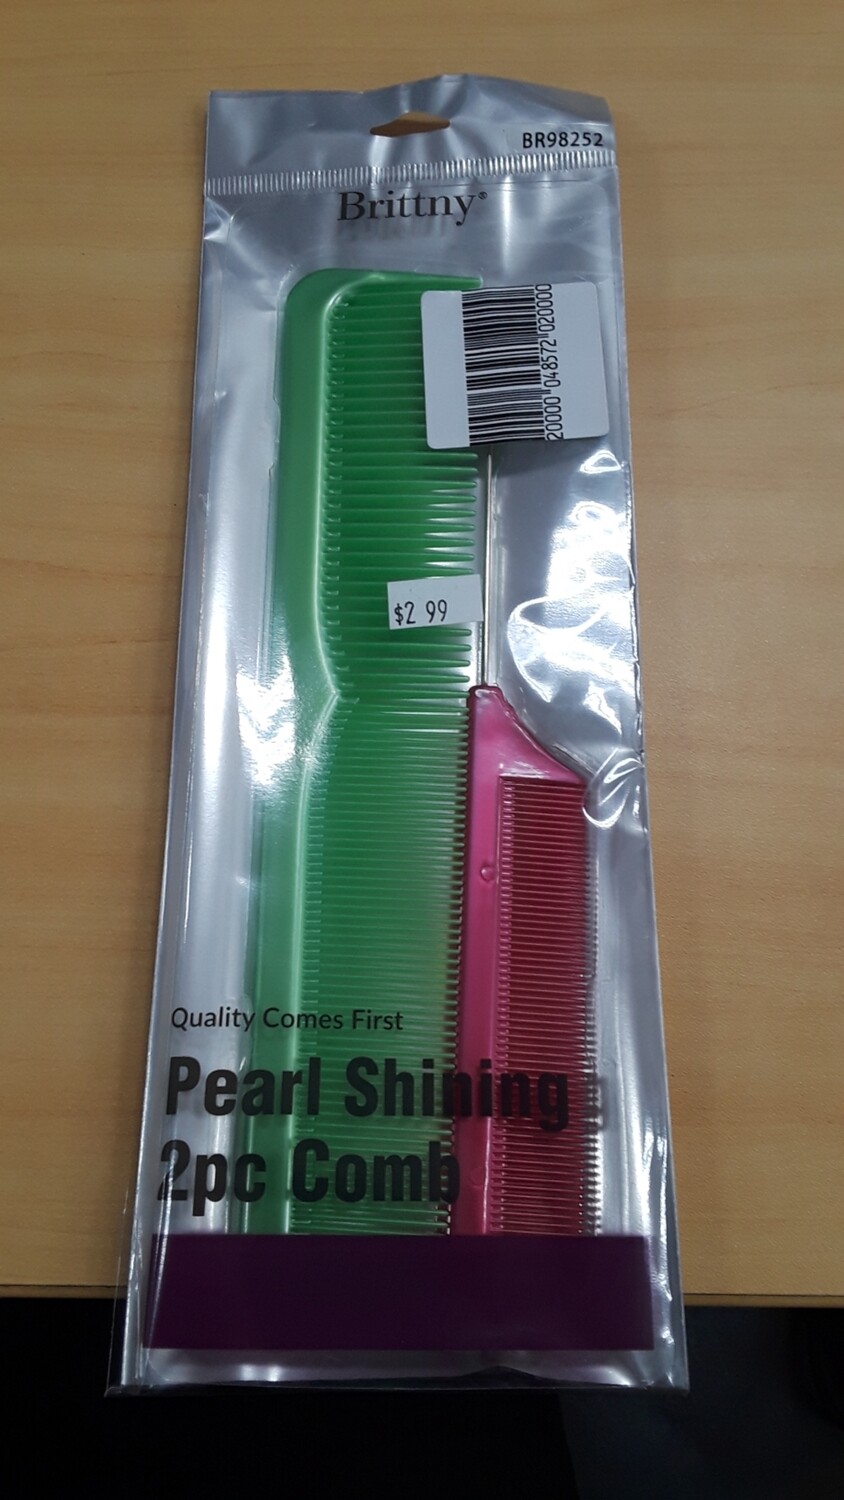 Pearl Shinning 2pc Comb